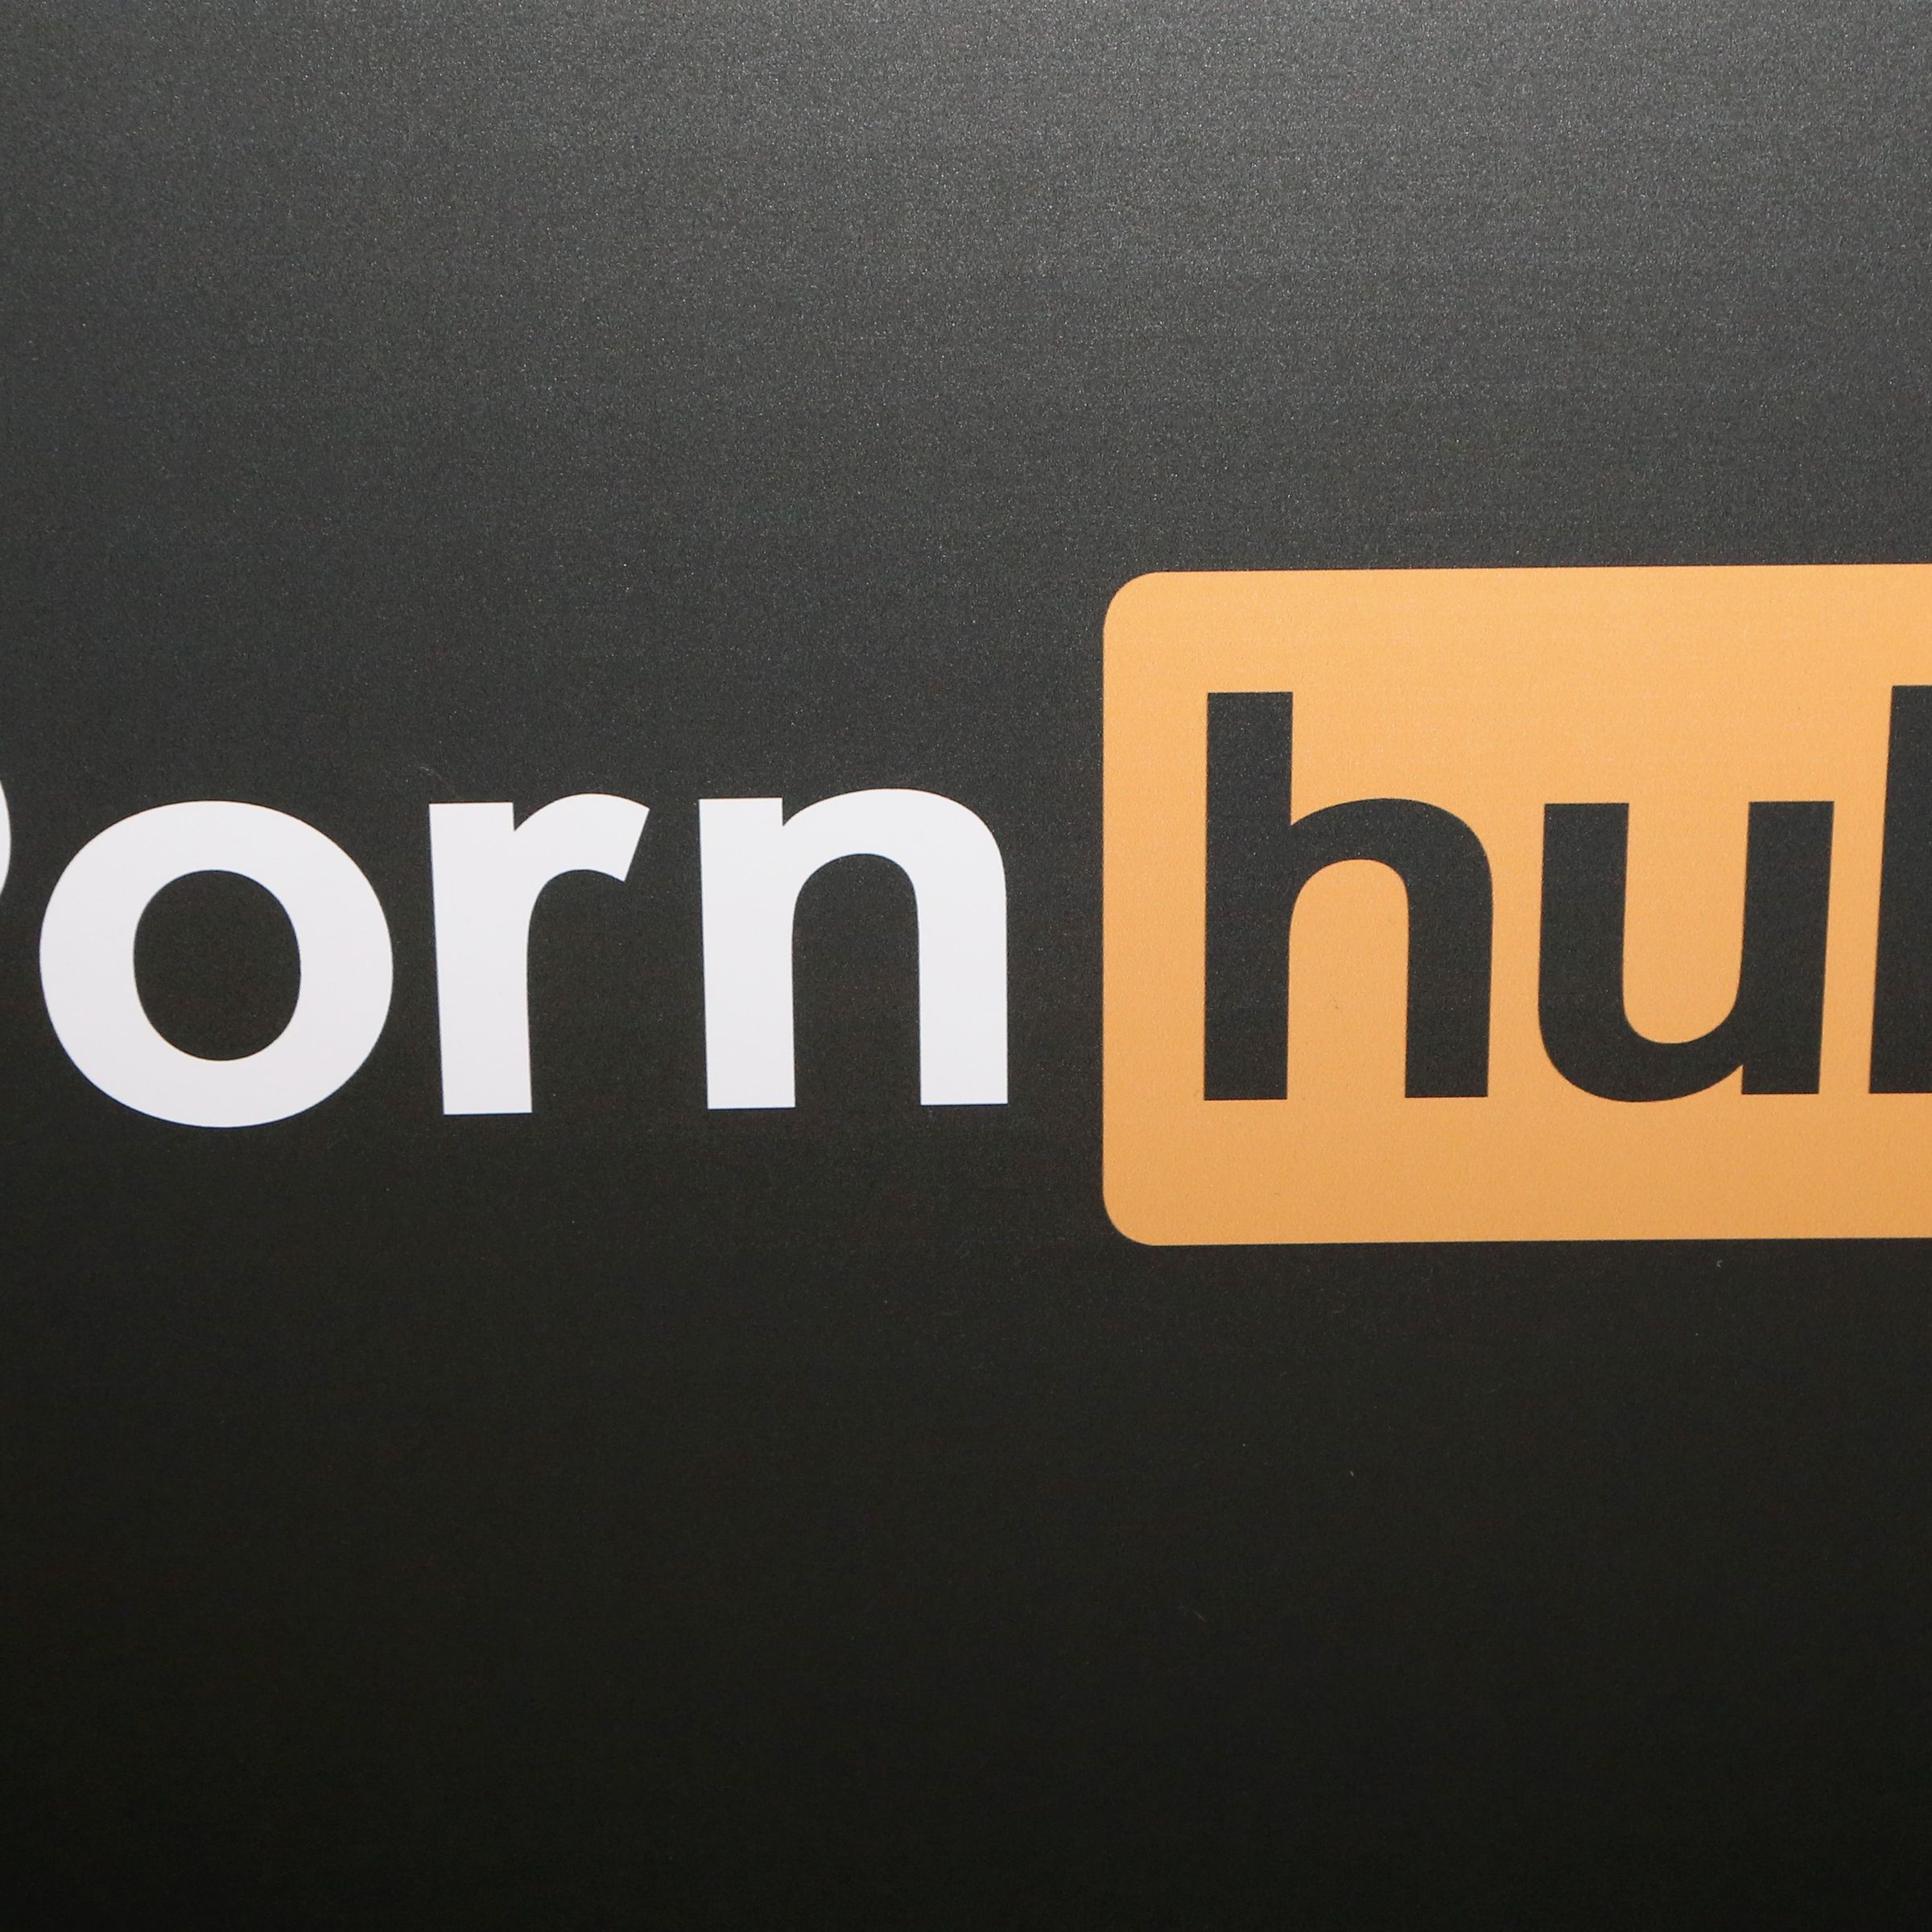 An image showing Pornhub’s logo